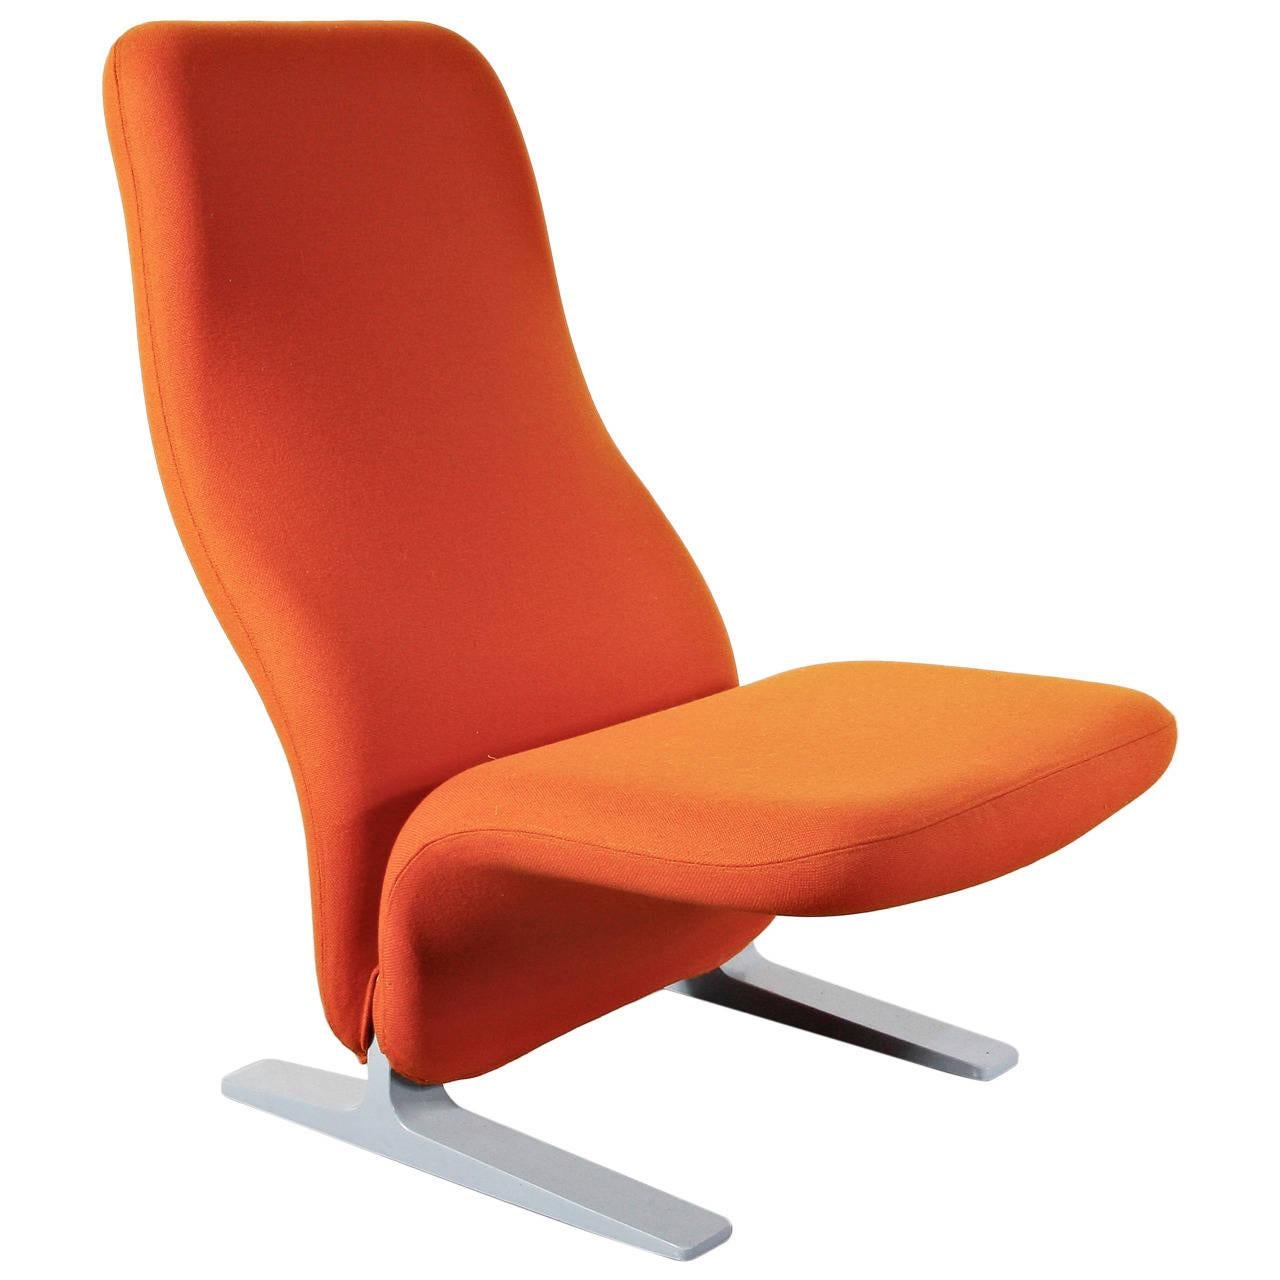 Mid-Century Modern Artifort Classic Orange High Back Concorde Chair by Pierre Paulin